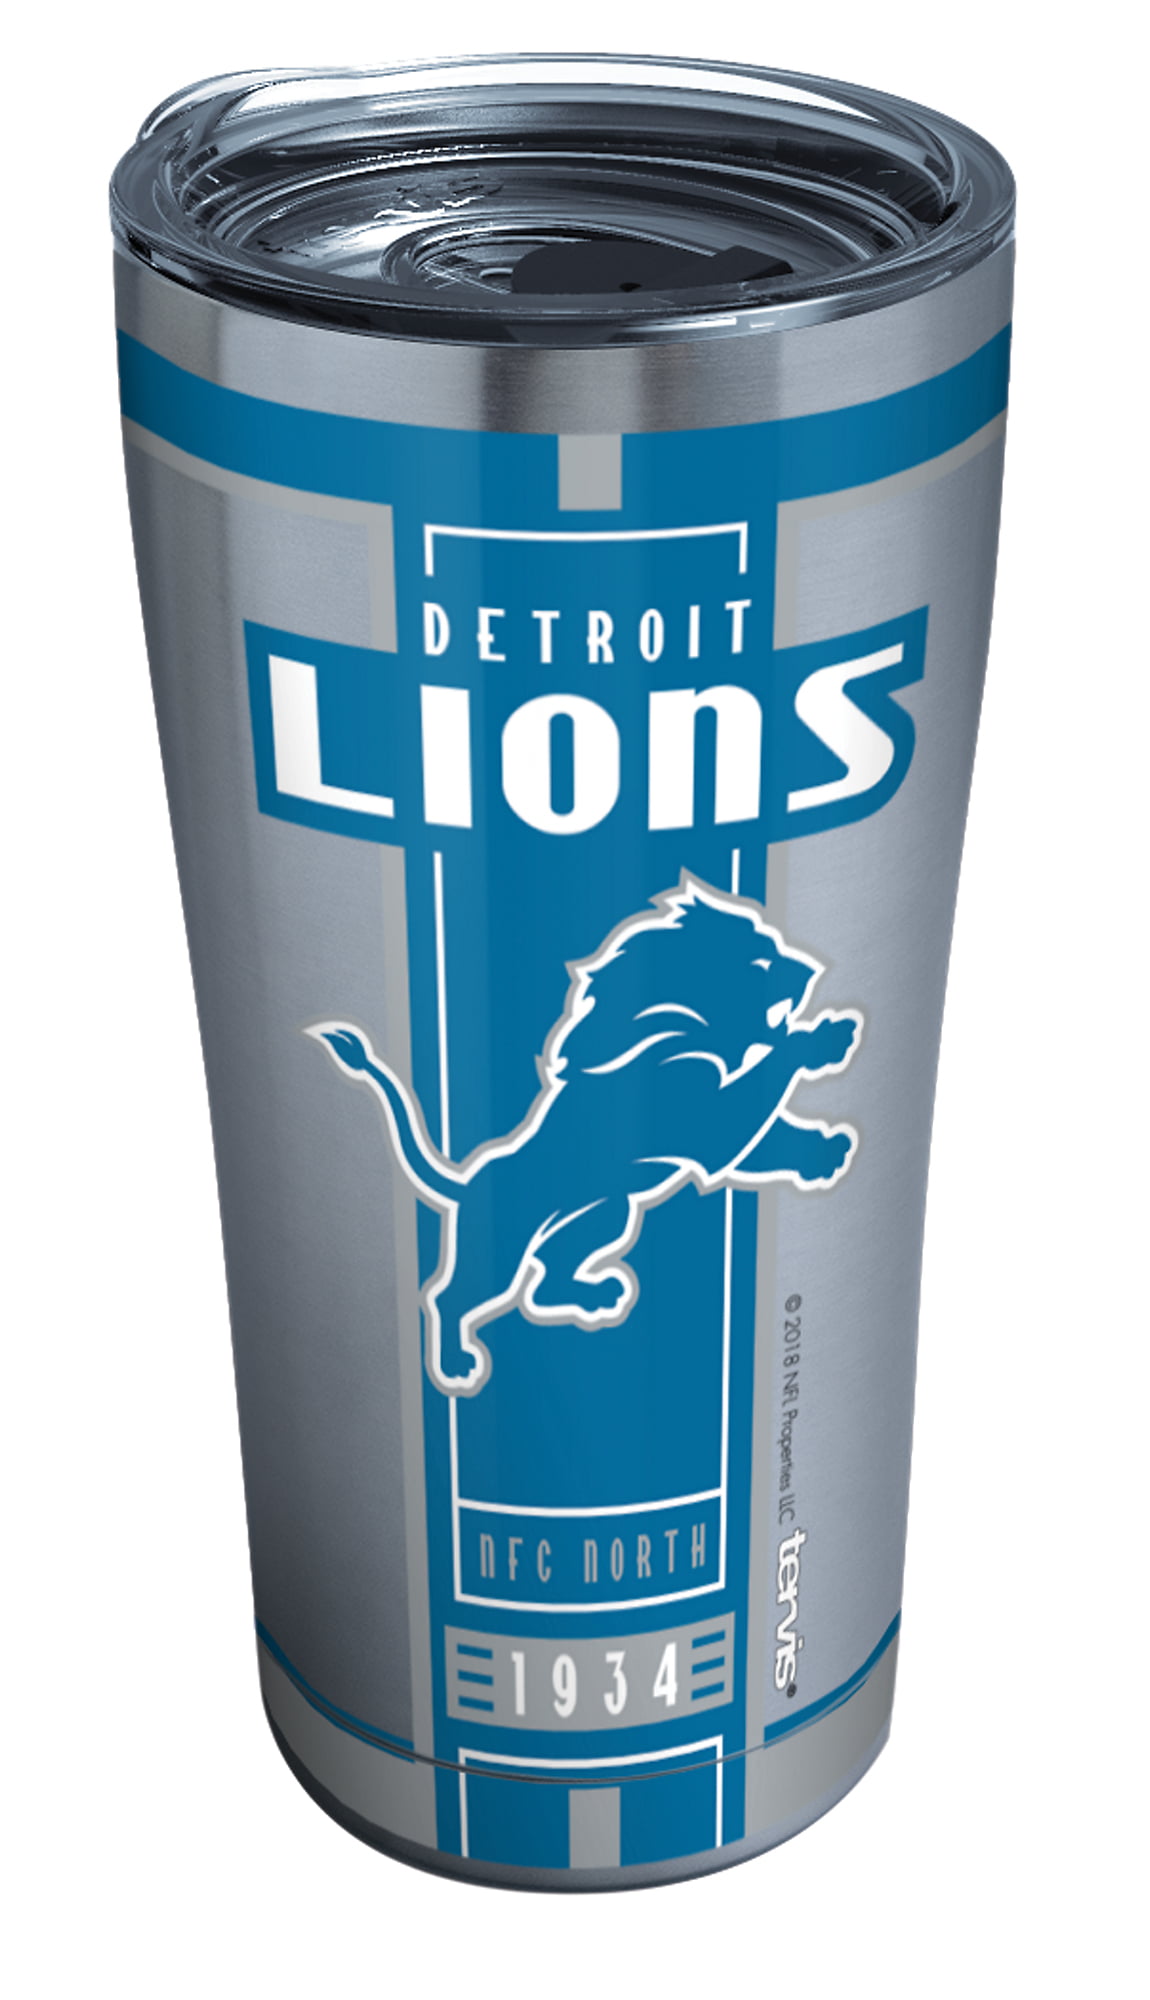 Officially Licensed NFL Detroit Lions 4D Ice Shaker